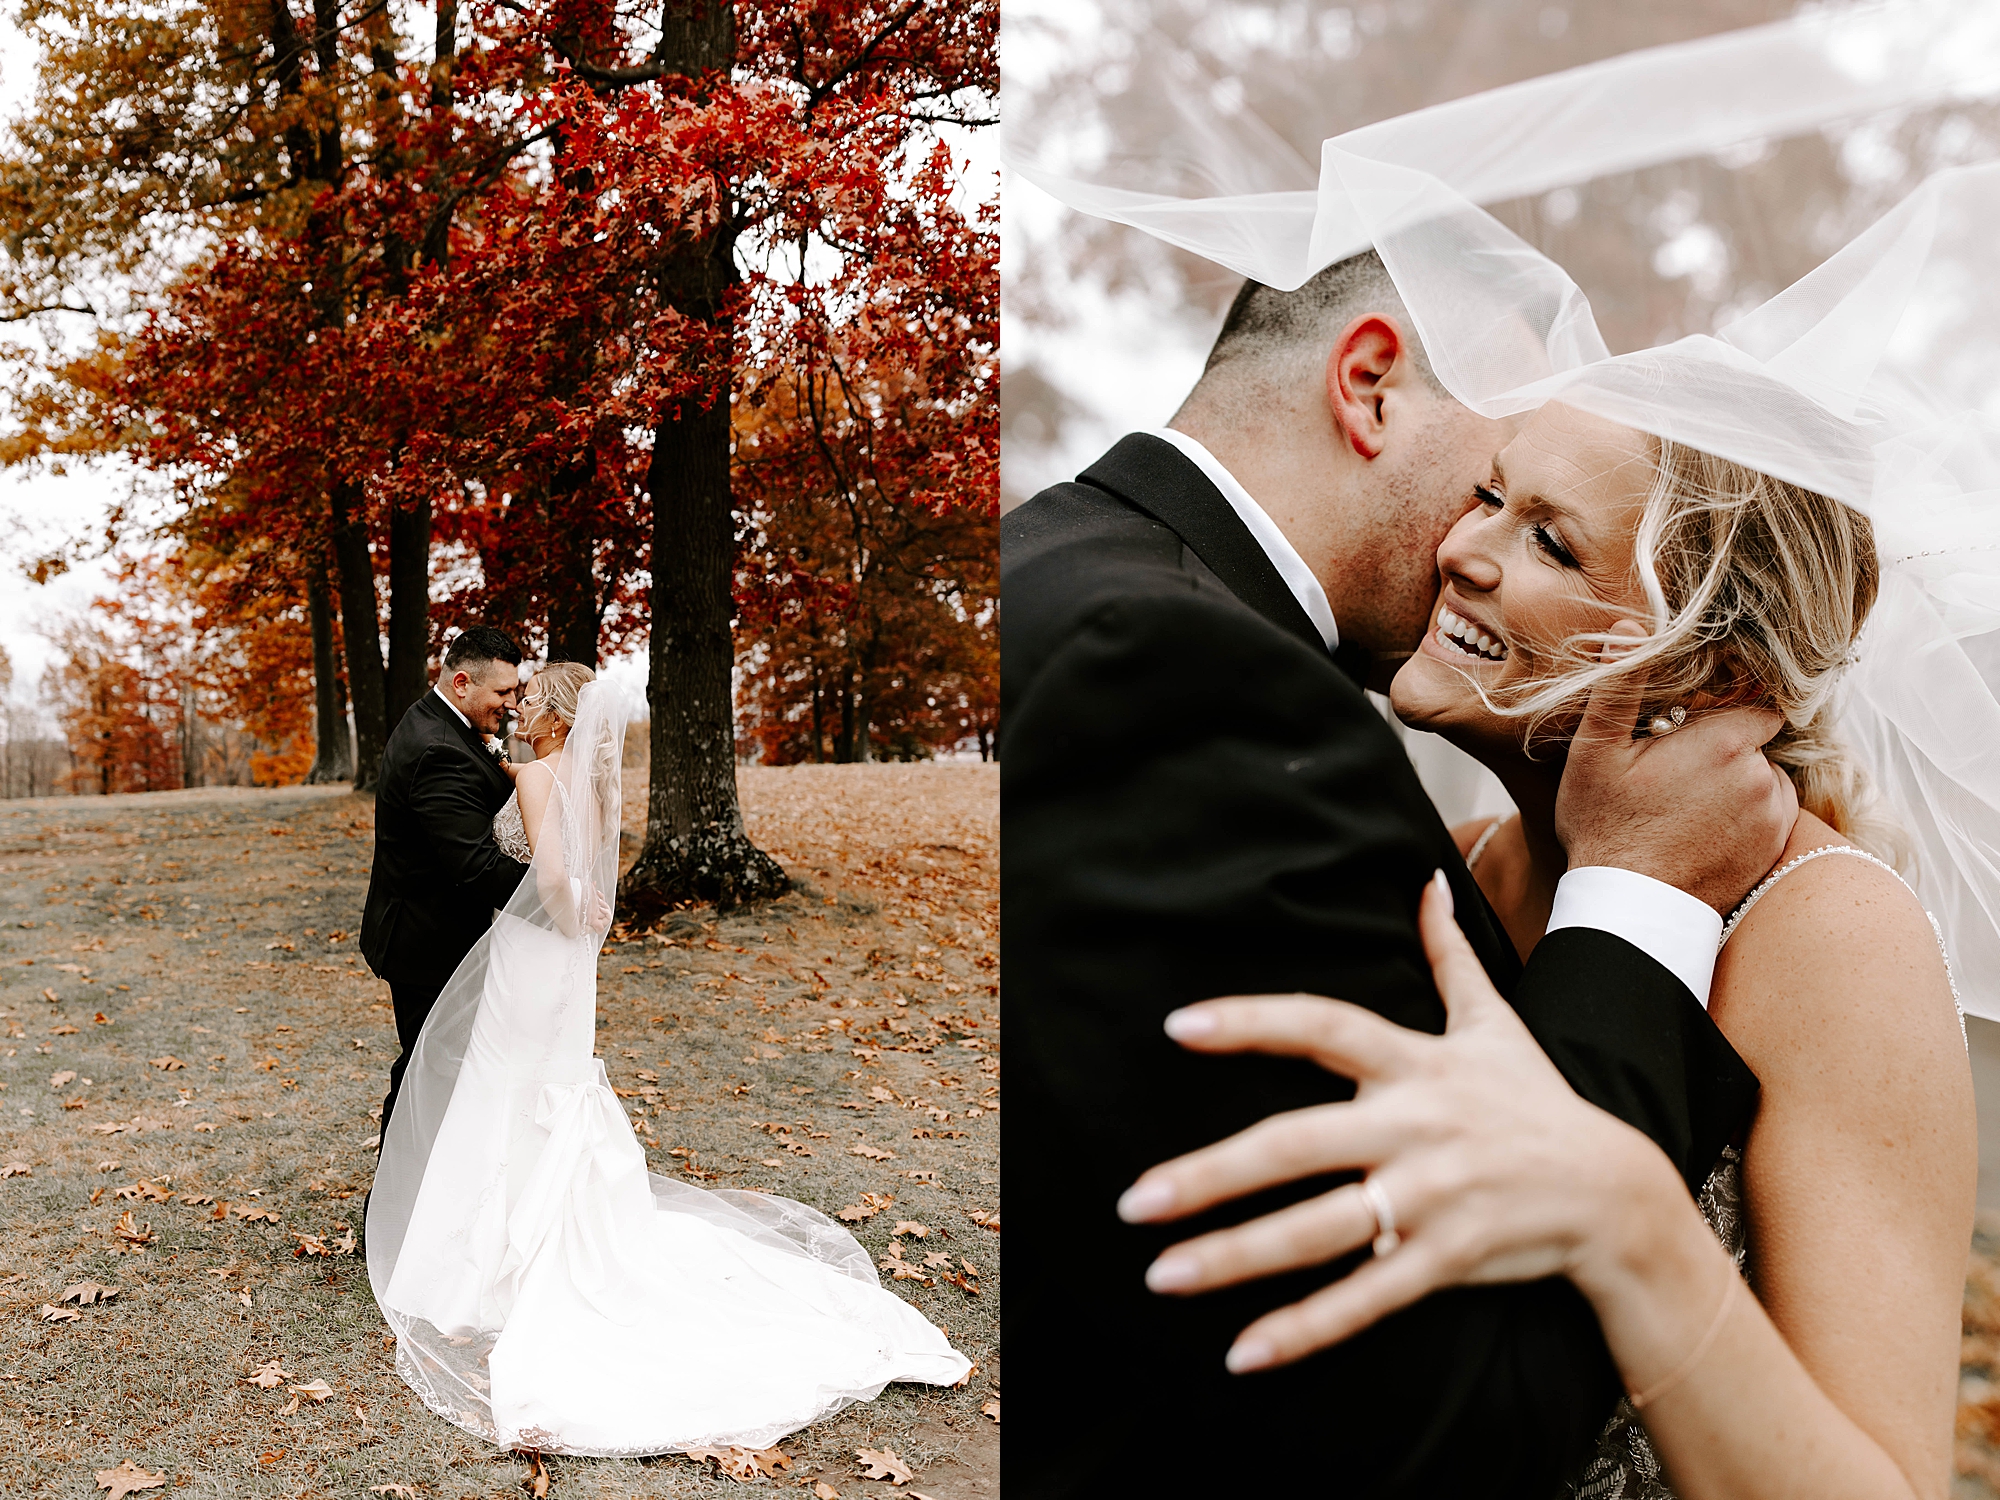 Indiana Country Club wedding, golf club wedding venues, pittsburgh weddings, Rachel Wehan Photography